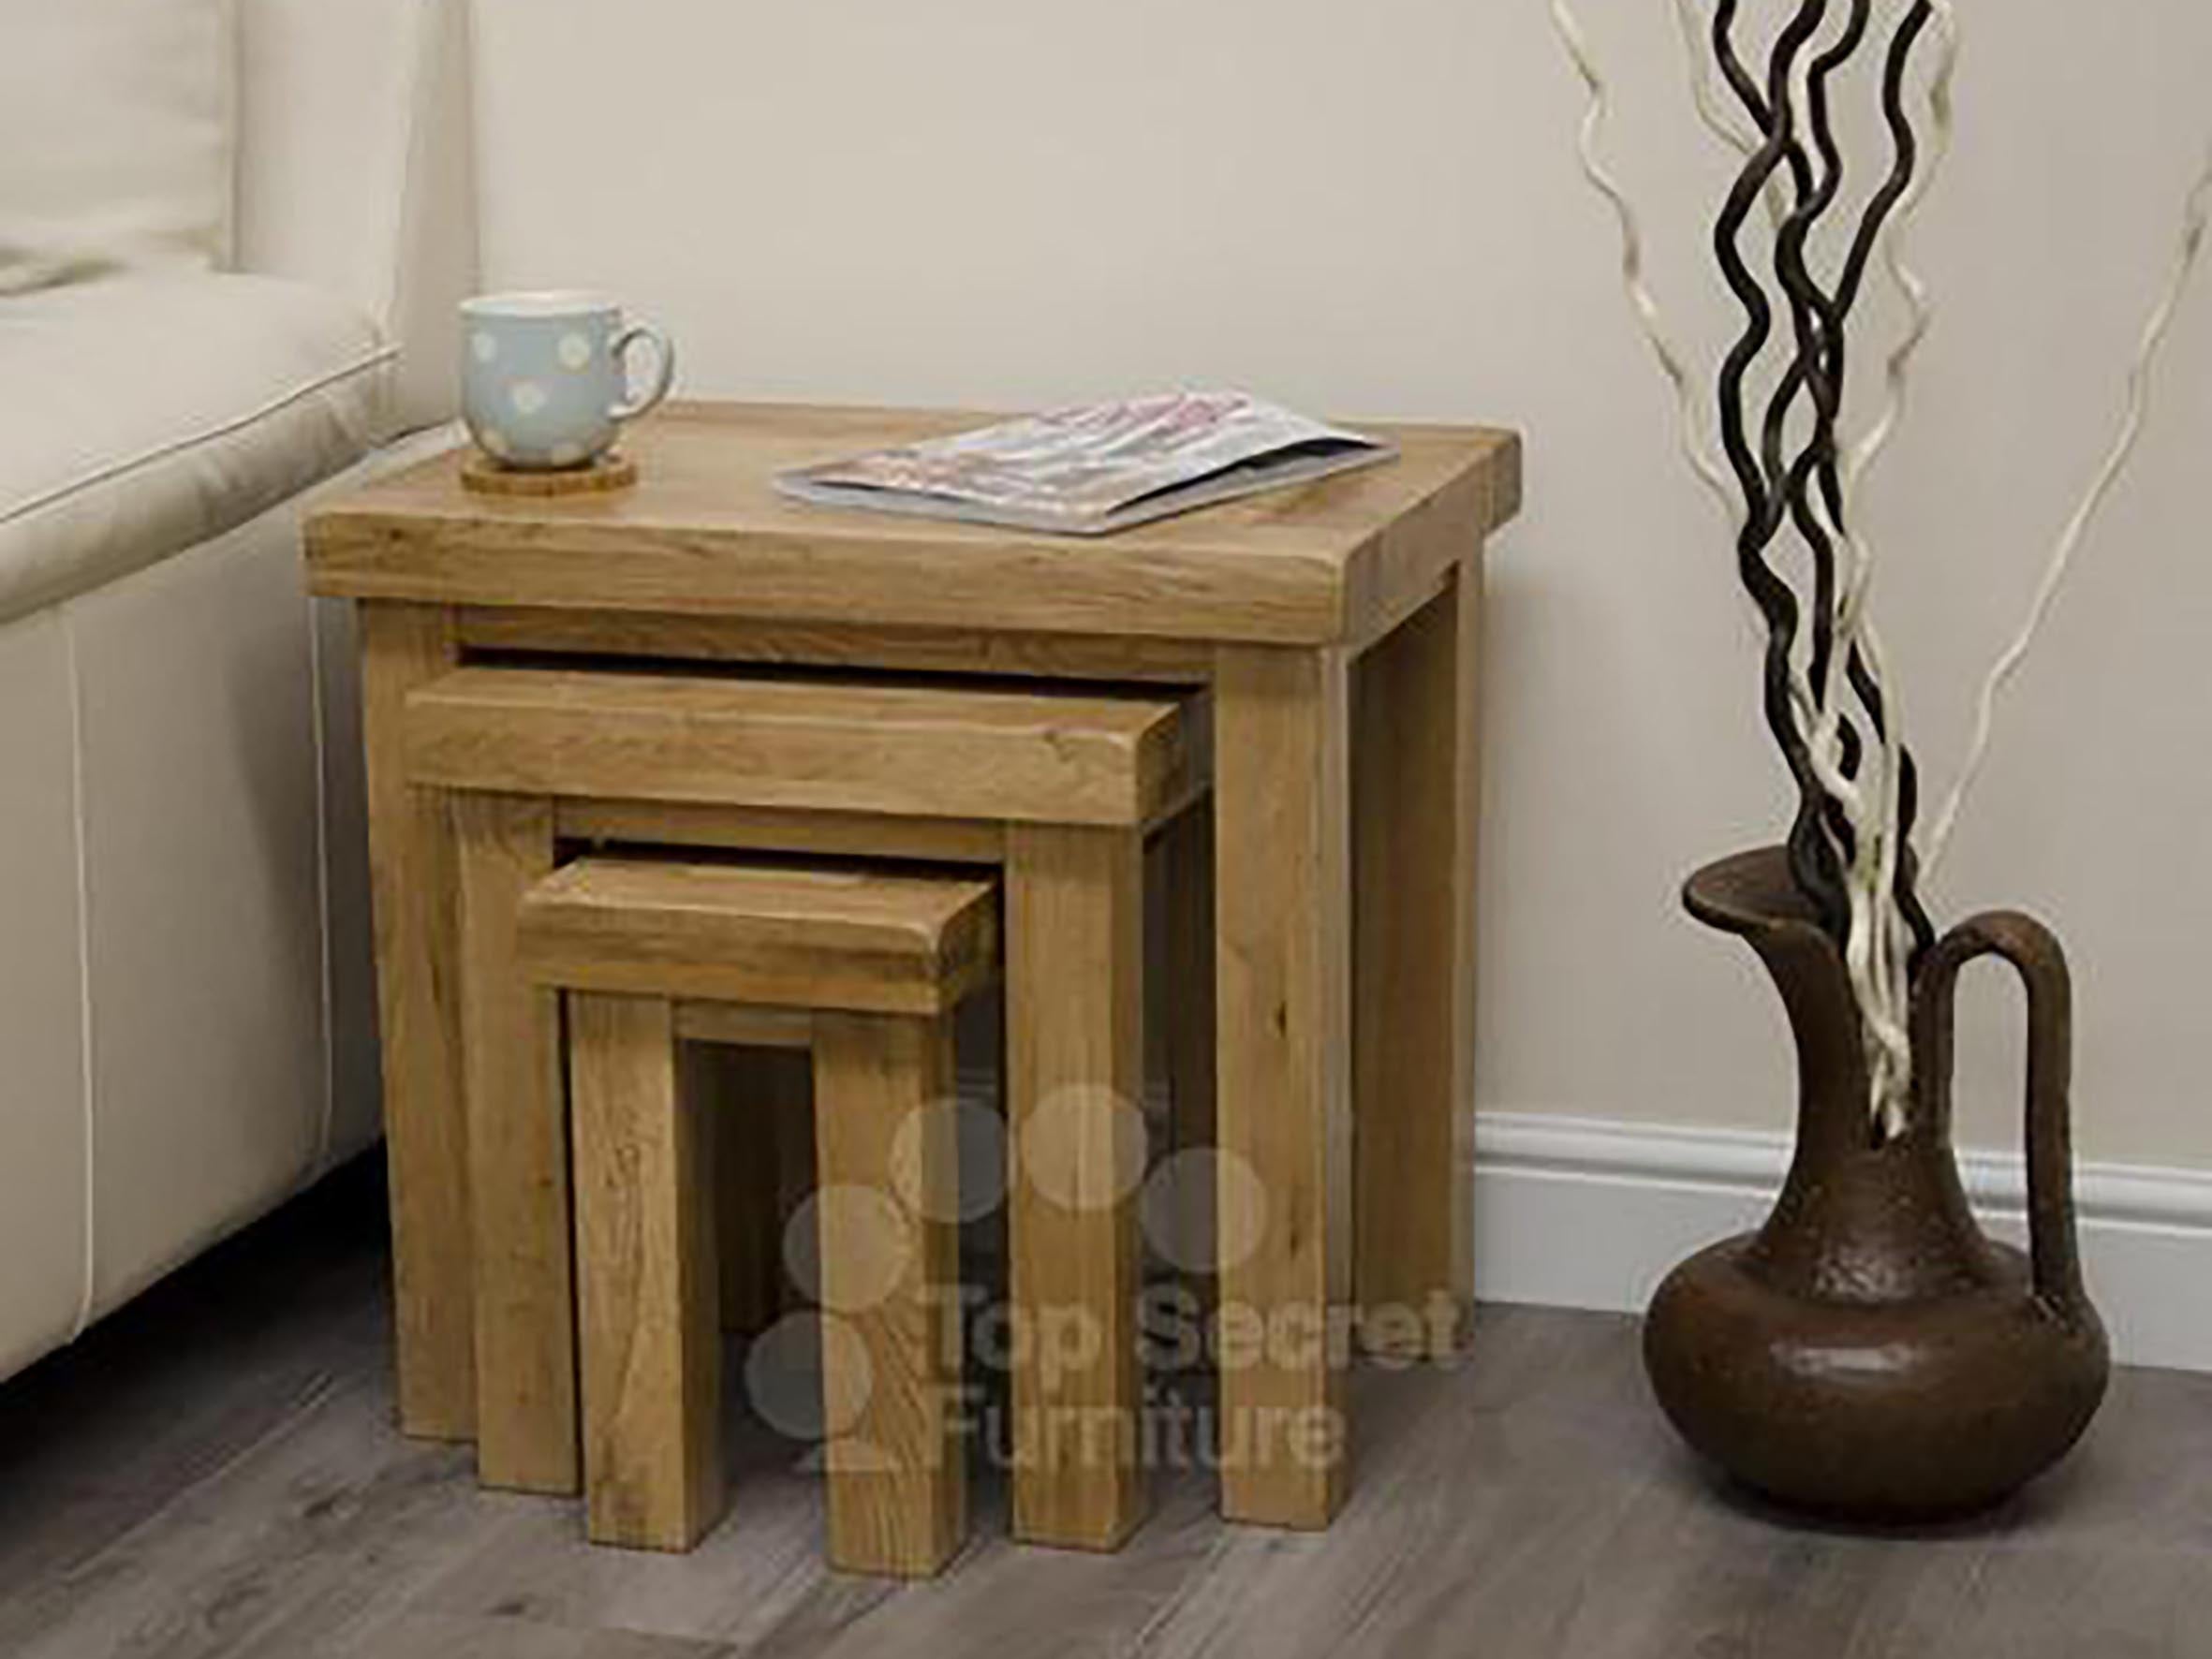 100% solid oak furniture, Dalton Nest of Tables